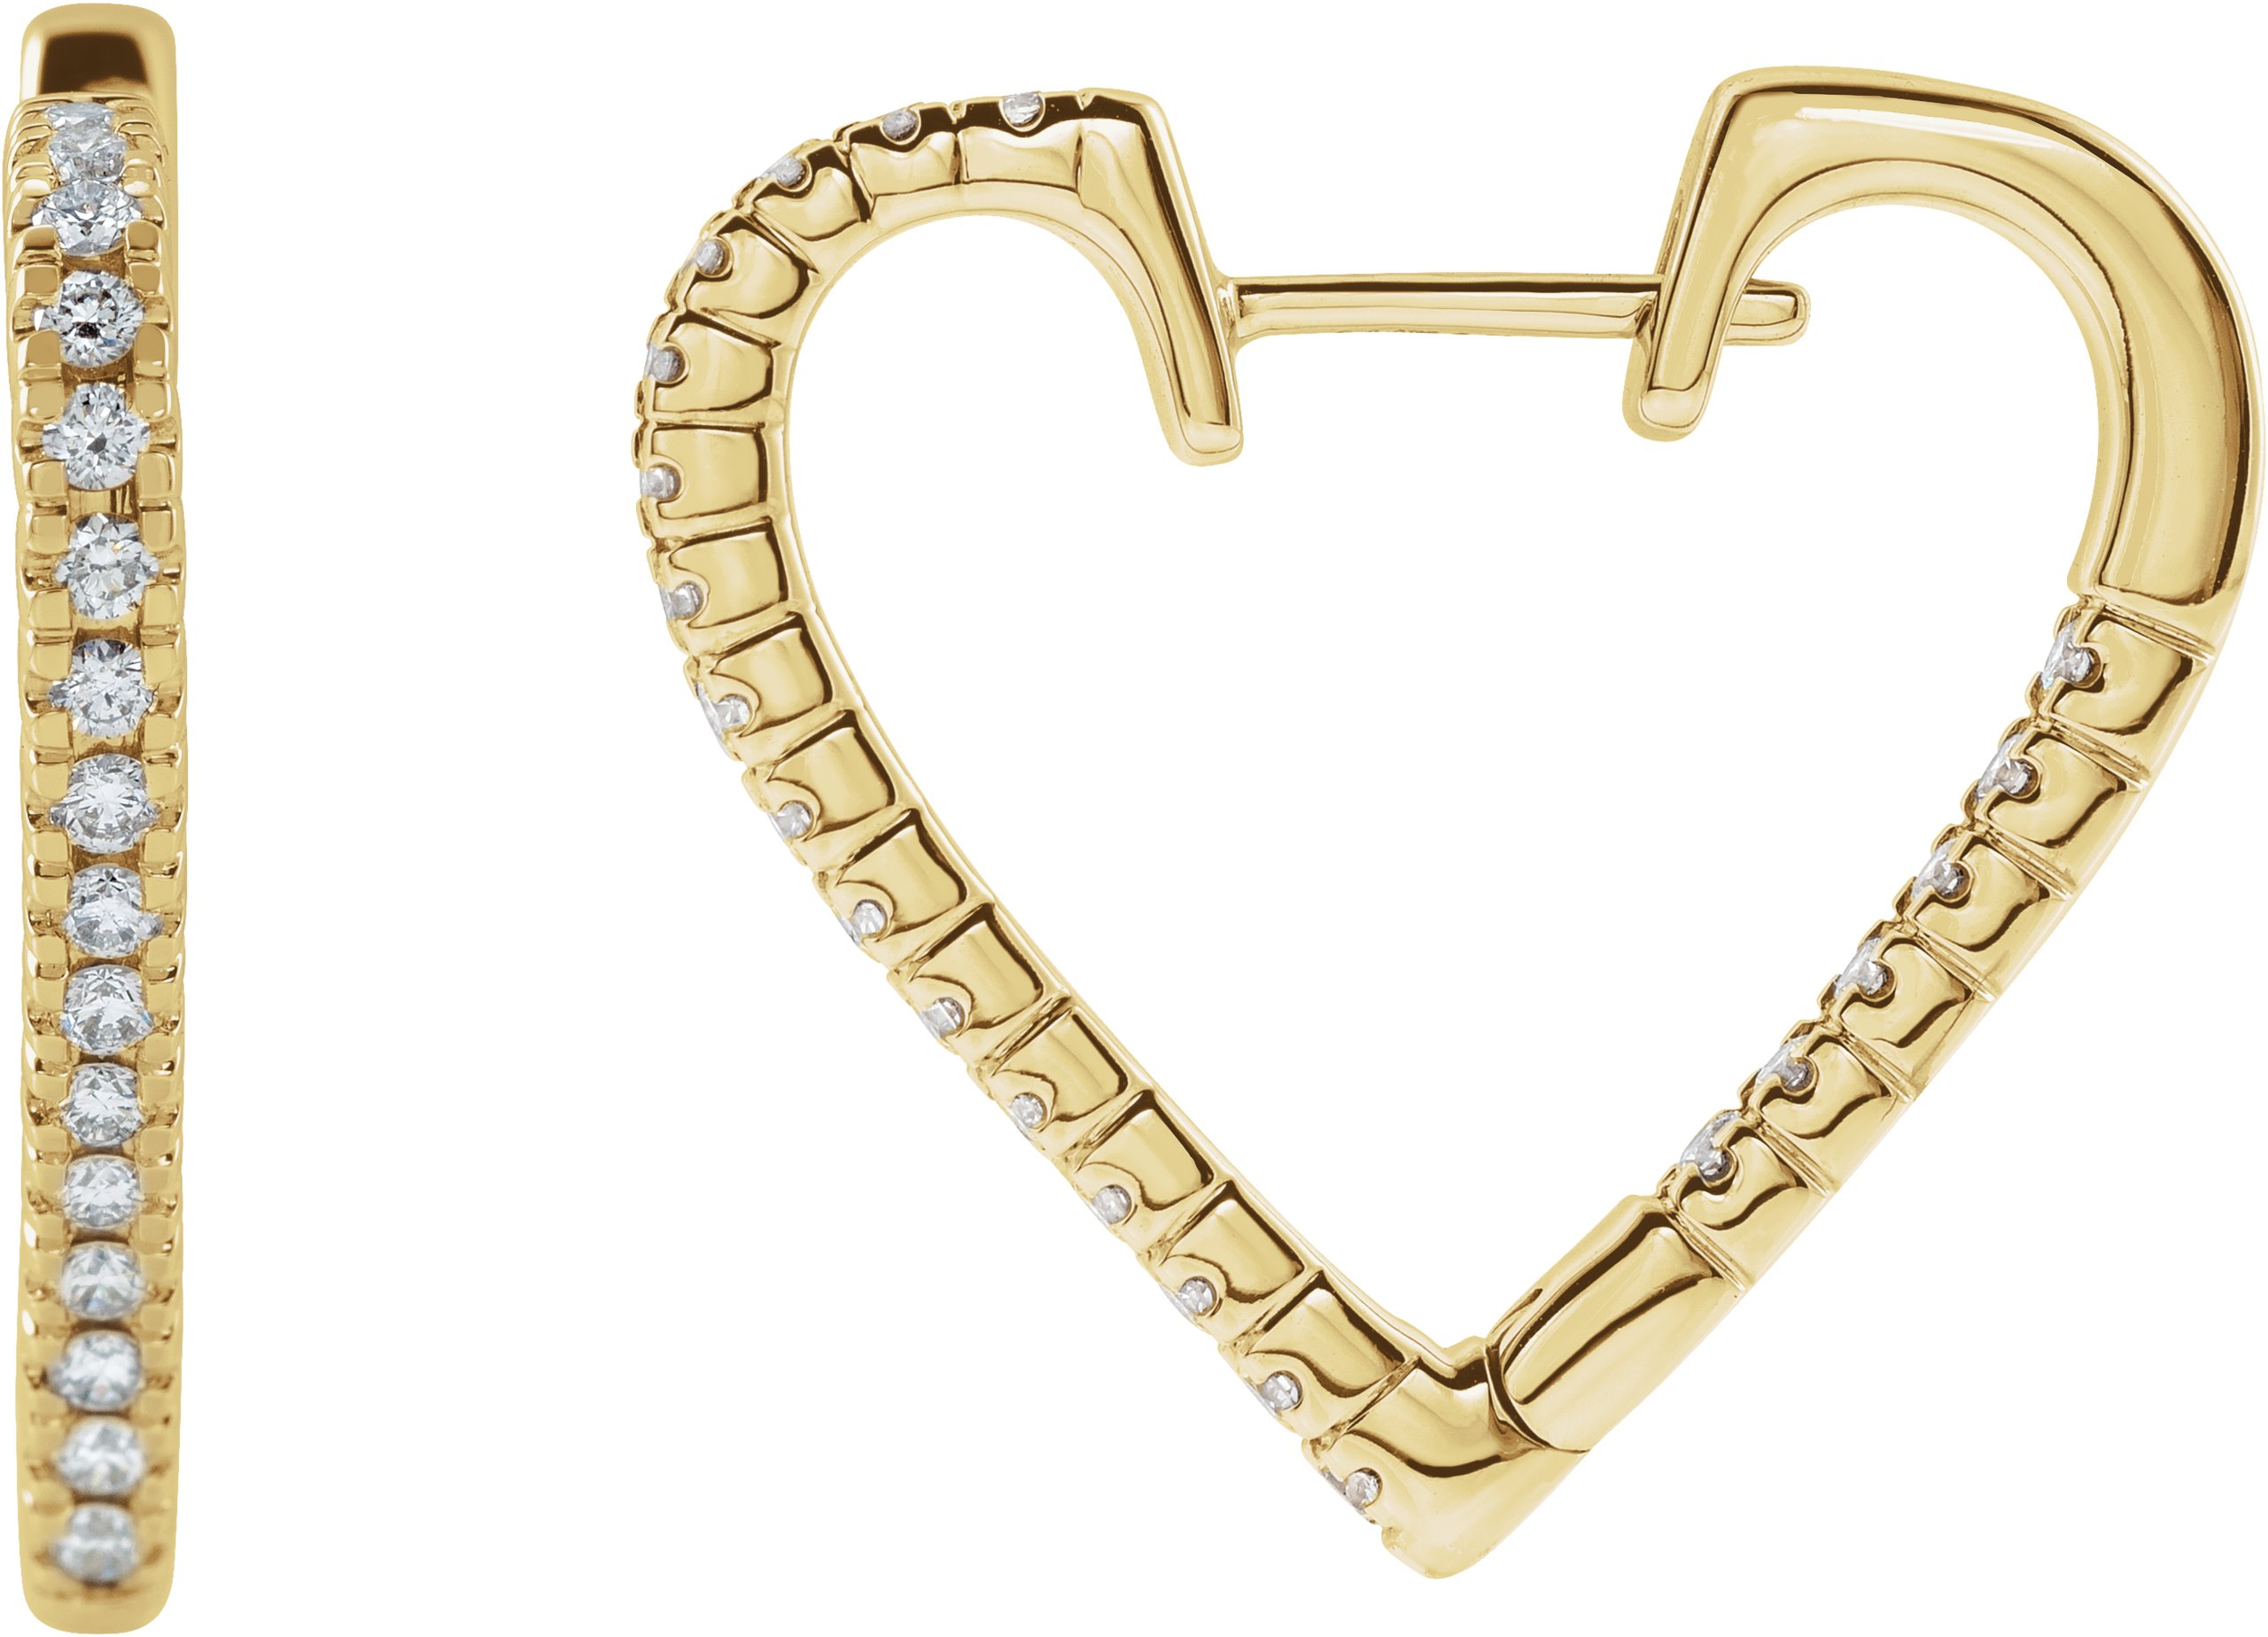 14K Yellow 5/8 CTW Natural Diamond Heart Earrings